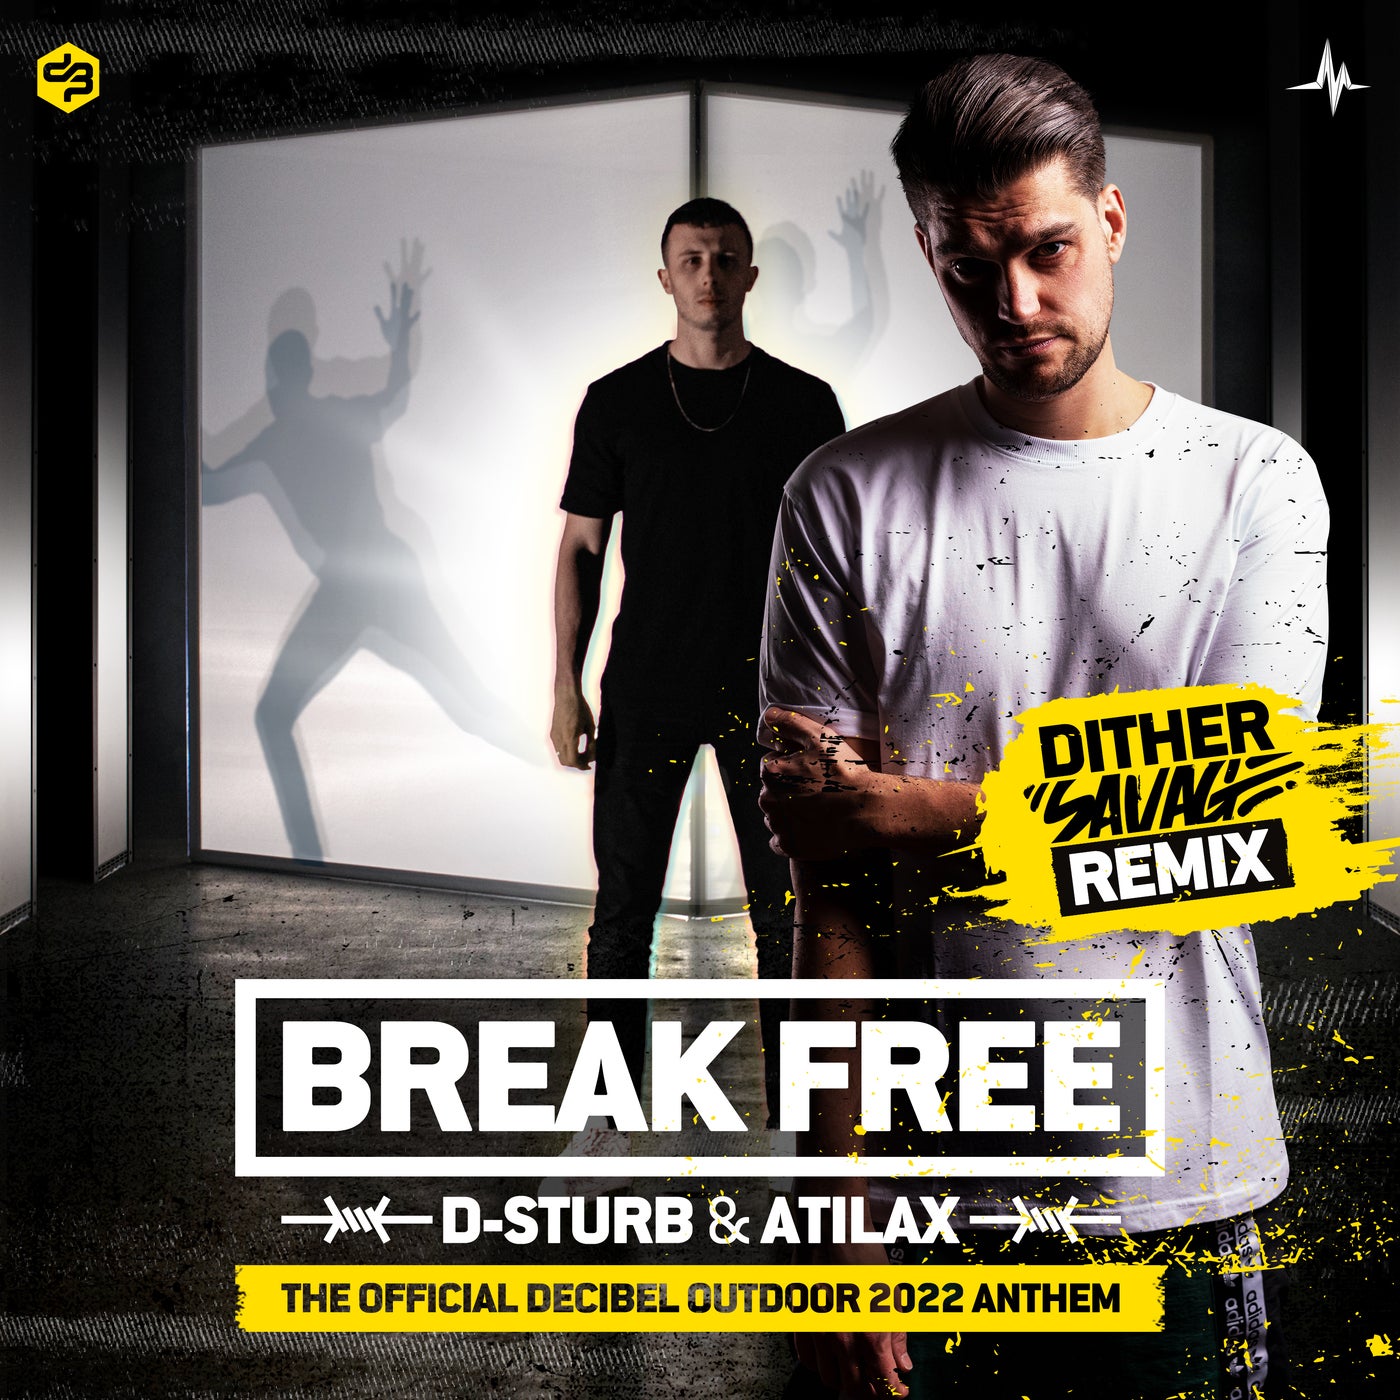 Break Free(Official Decibel Outdoor 2022 Anthem) - Dither Savage Remix